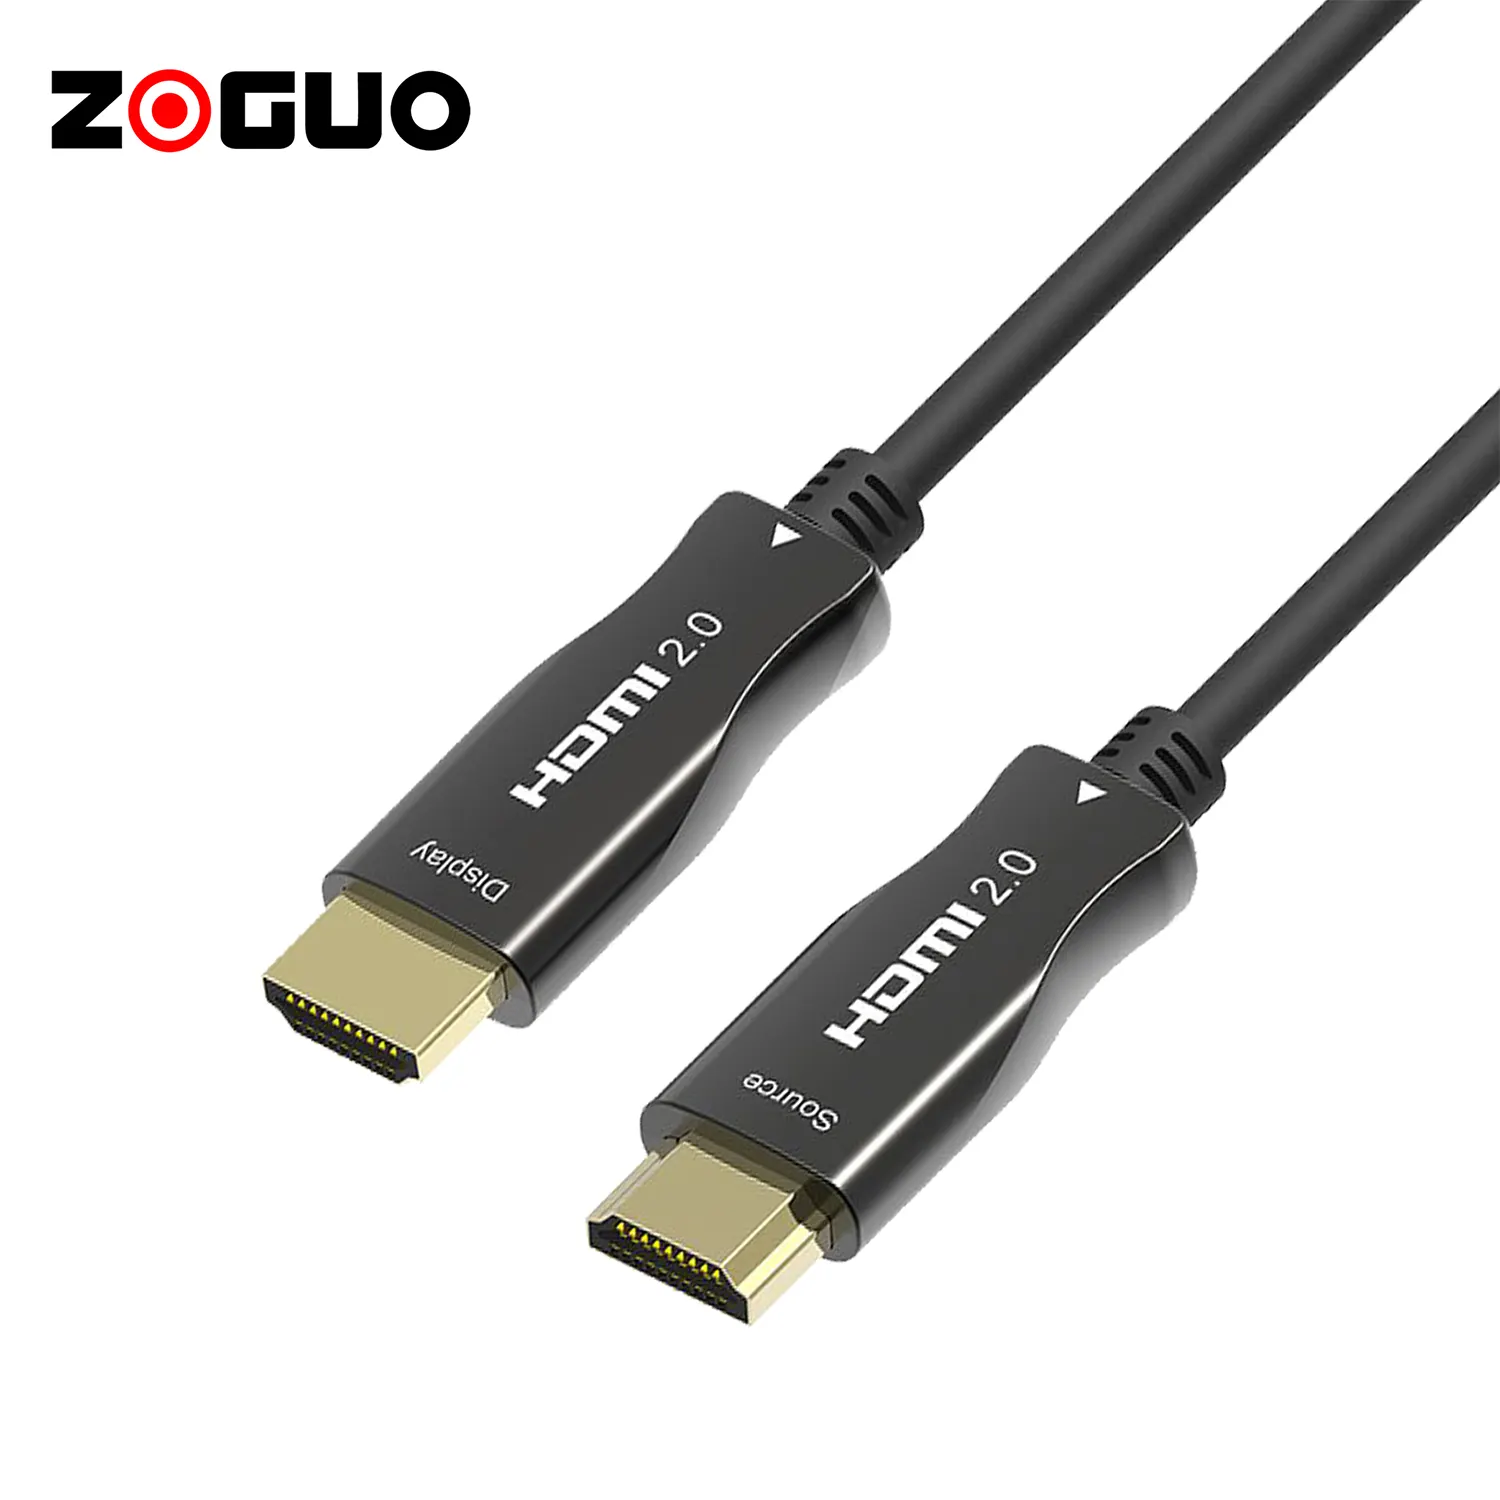 Kabel serat optik HDMI 4K, kabel serat optik 18Gbps 4K 60Hz Video HD AOC HDMI 2.0 untuk Monitor UHD/TV/Display kecepatan tinggi 20cm